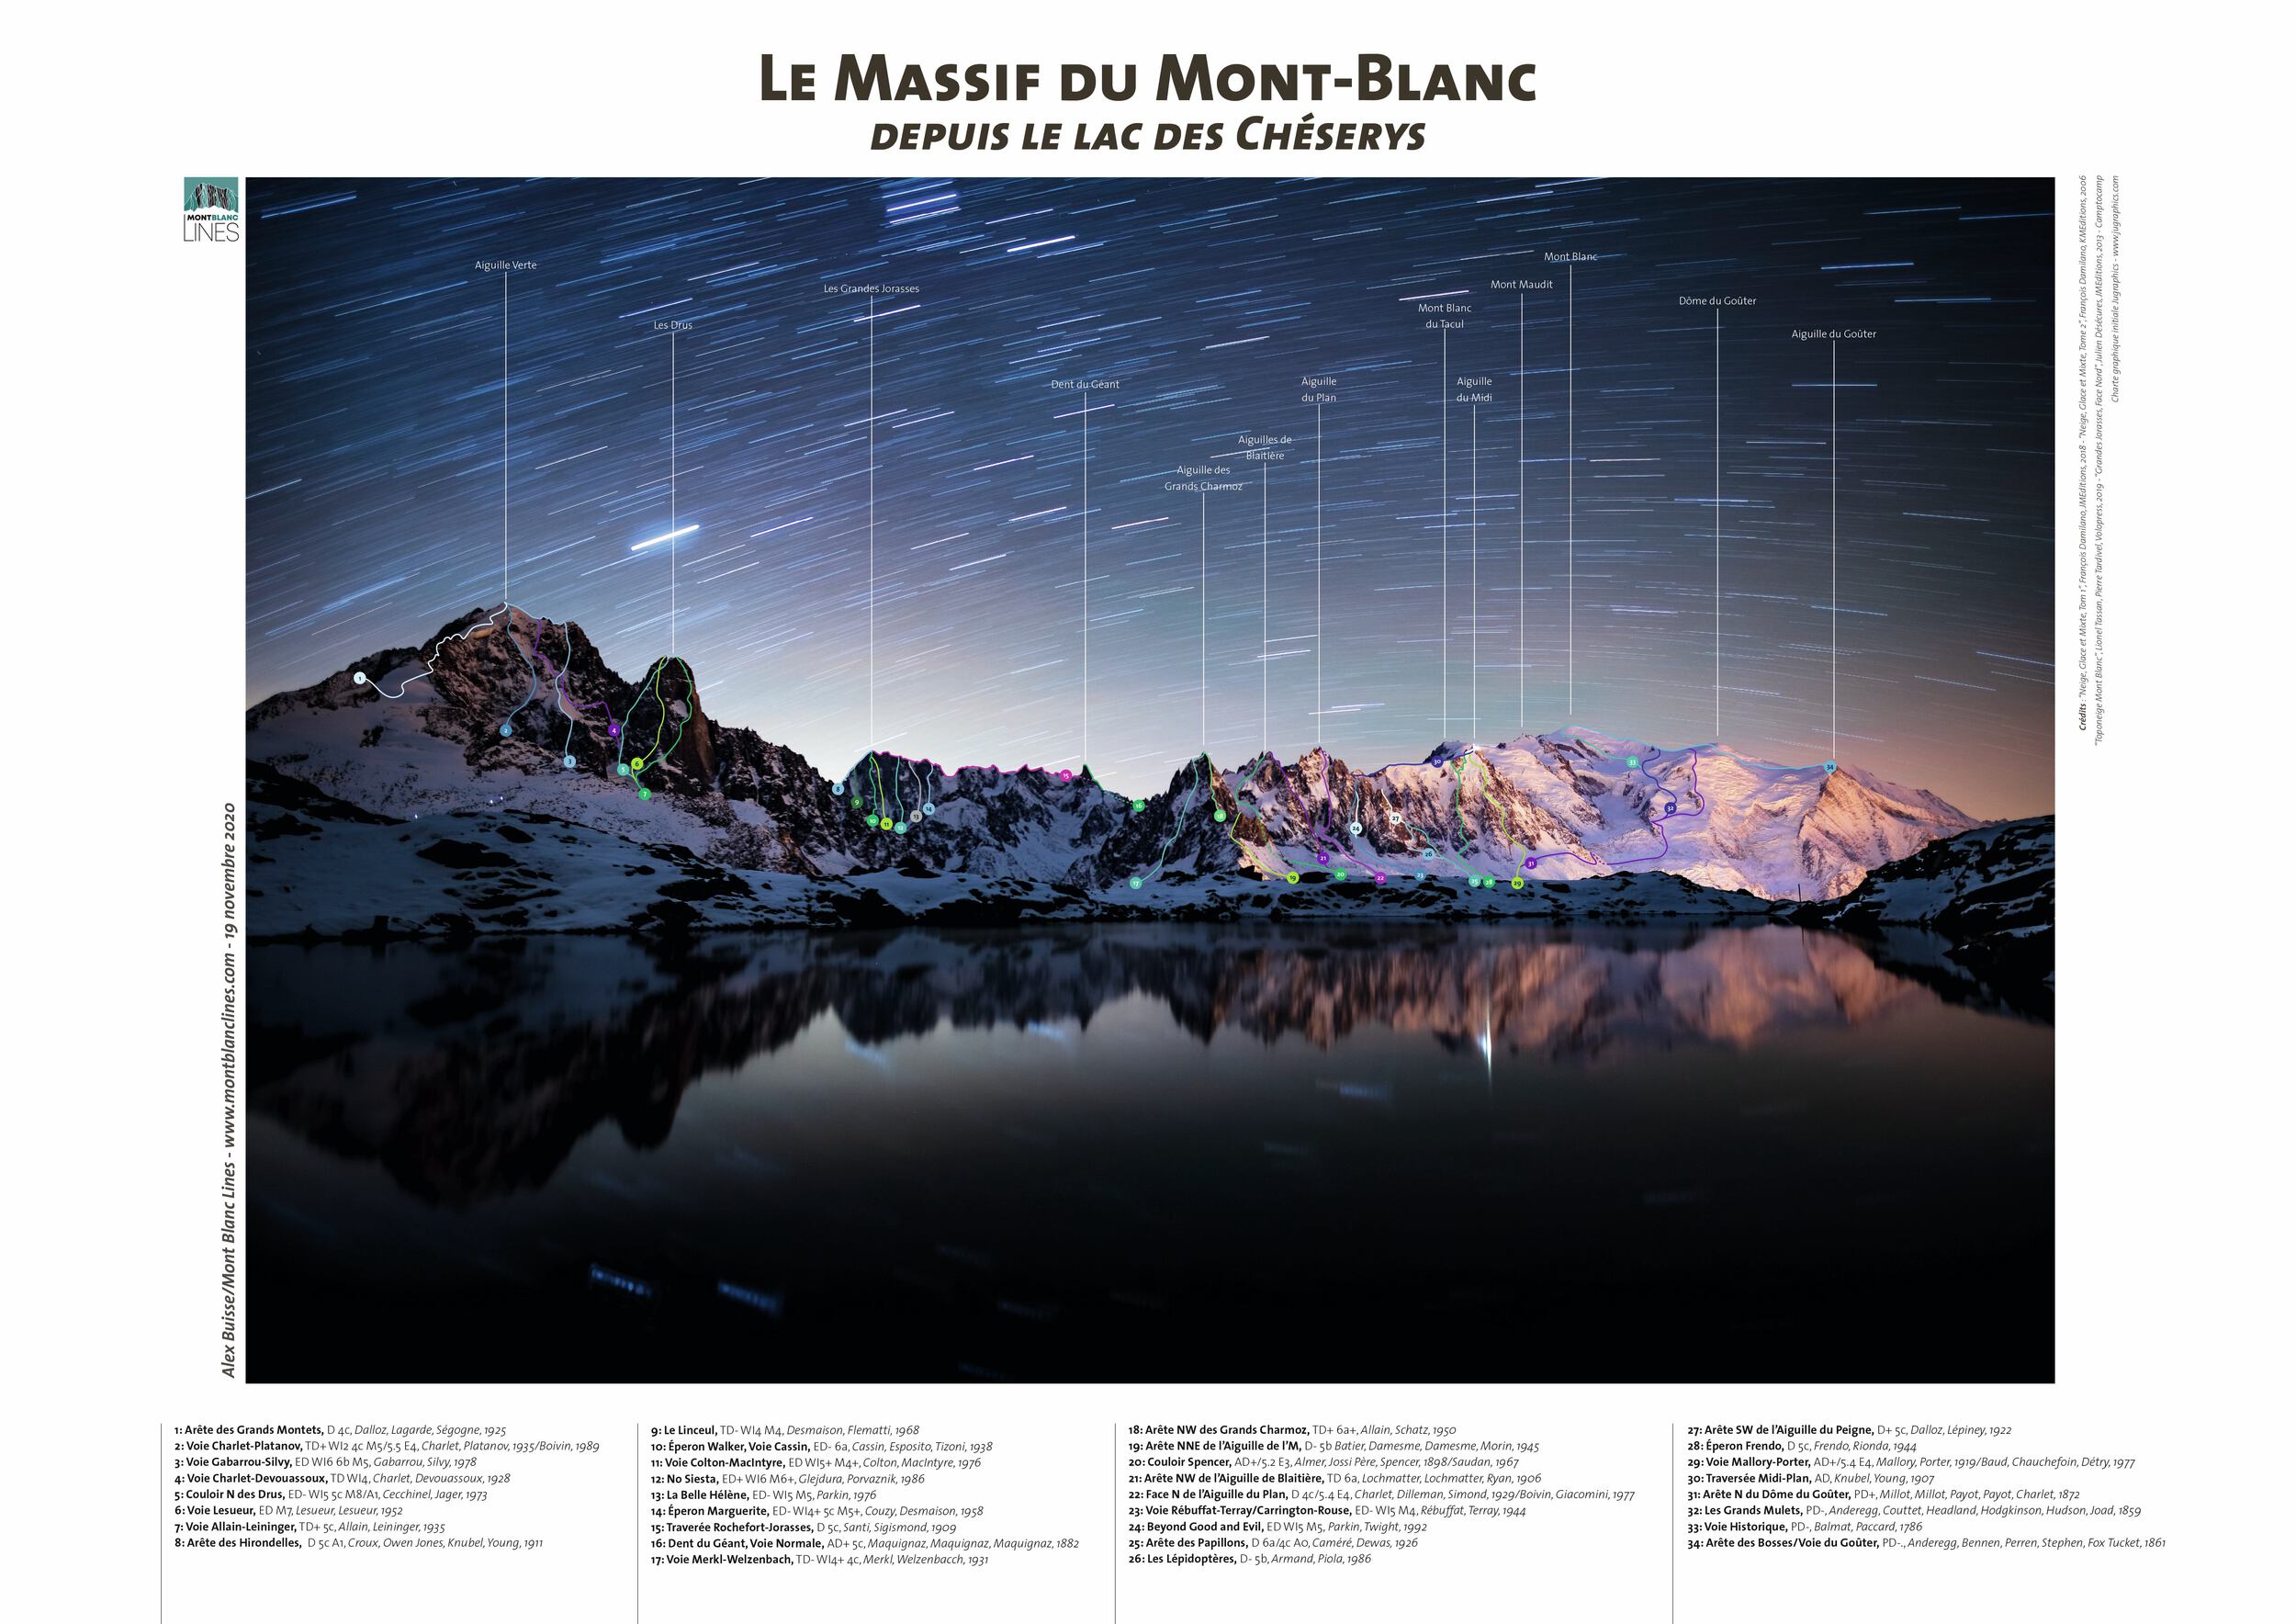 Mont-Blanc Range from the Chéserys Lake